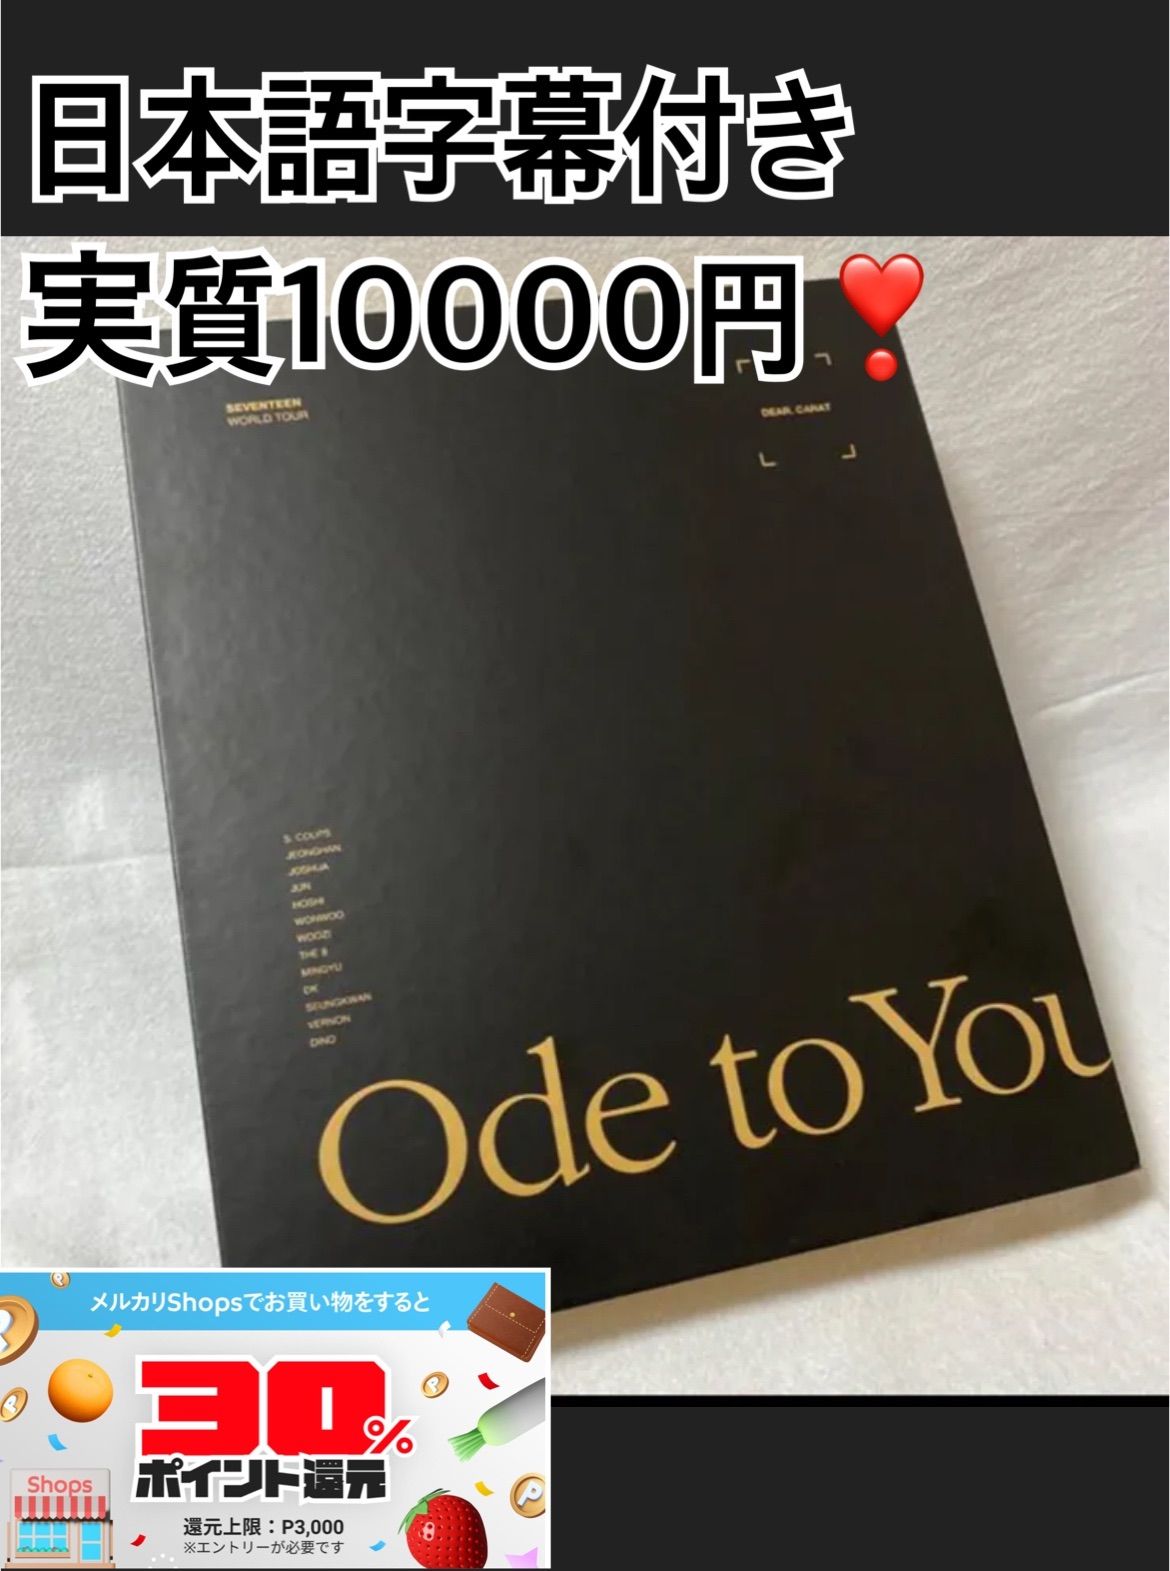 seventeen ode to you in Seoul ソウルコン dvd - メルカリ